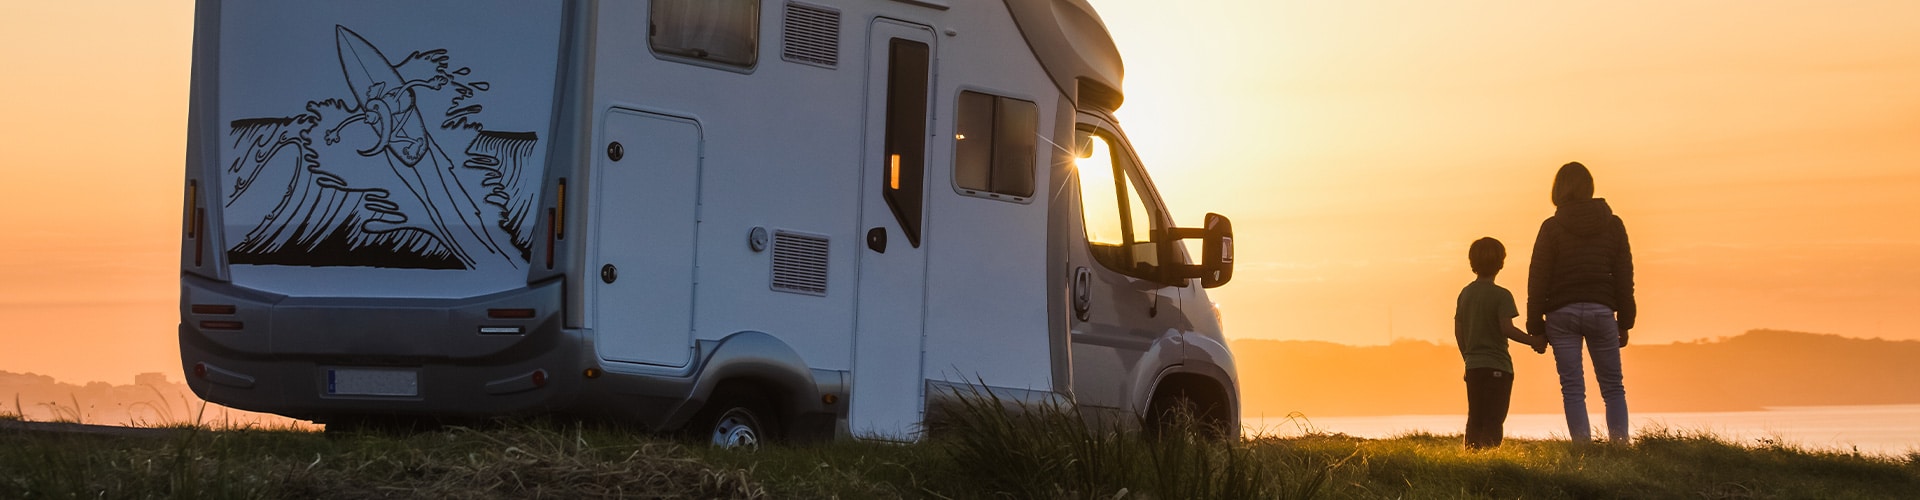 Assurance camping-car Thélem assurances